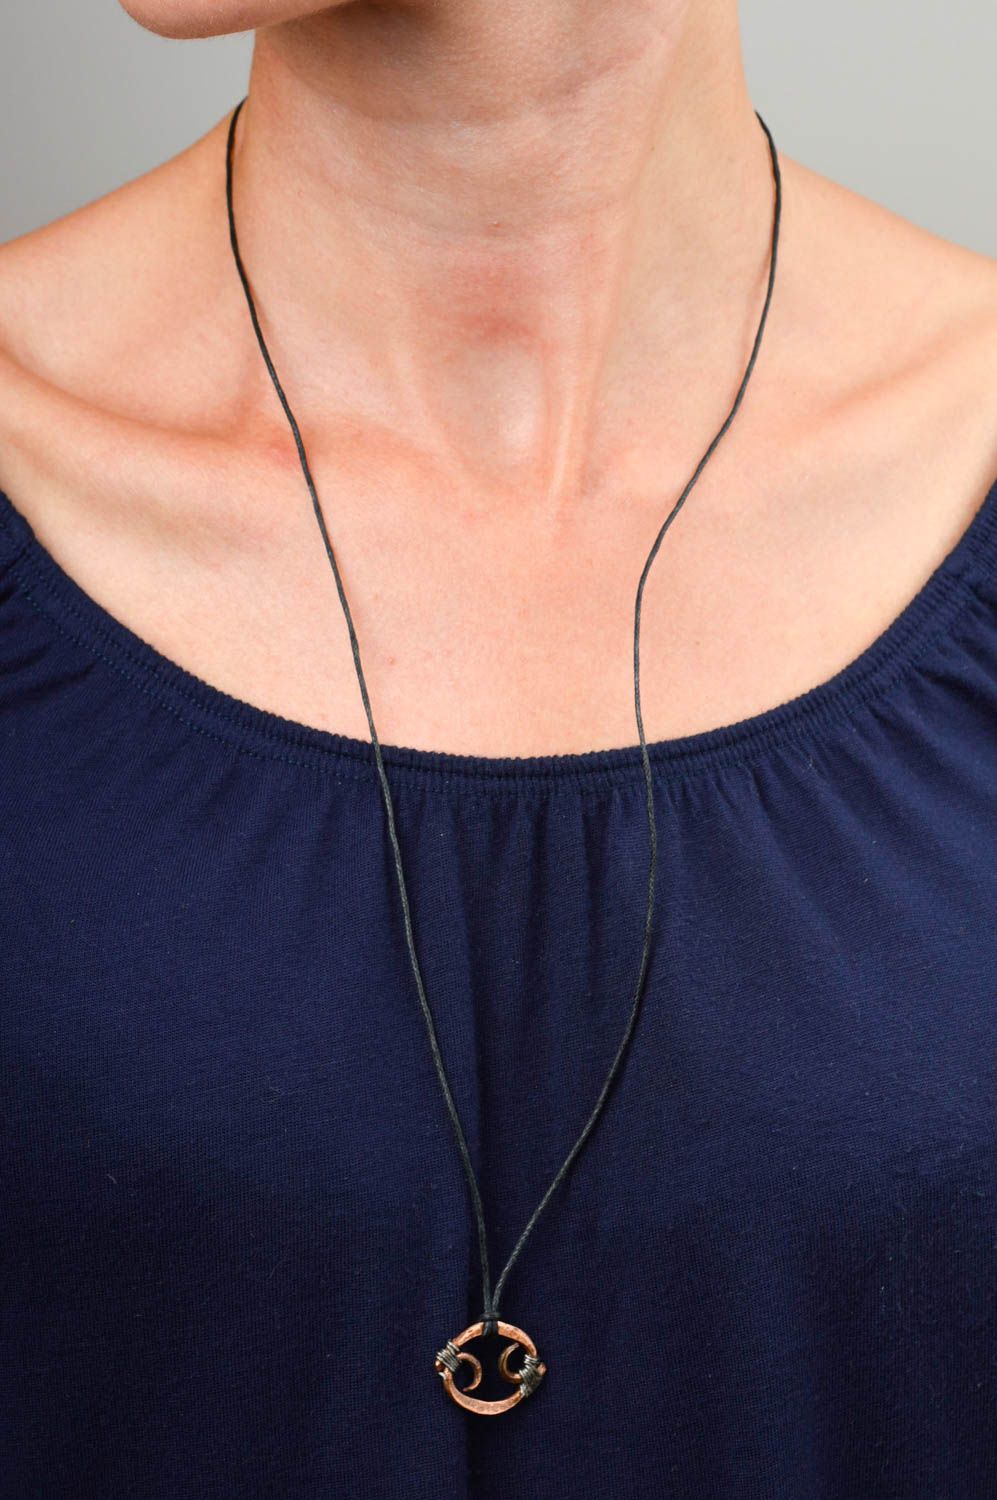 Beautiful handmade neck pendant metal jewelry designs neck accessories photo 1